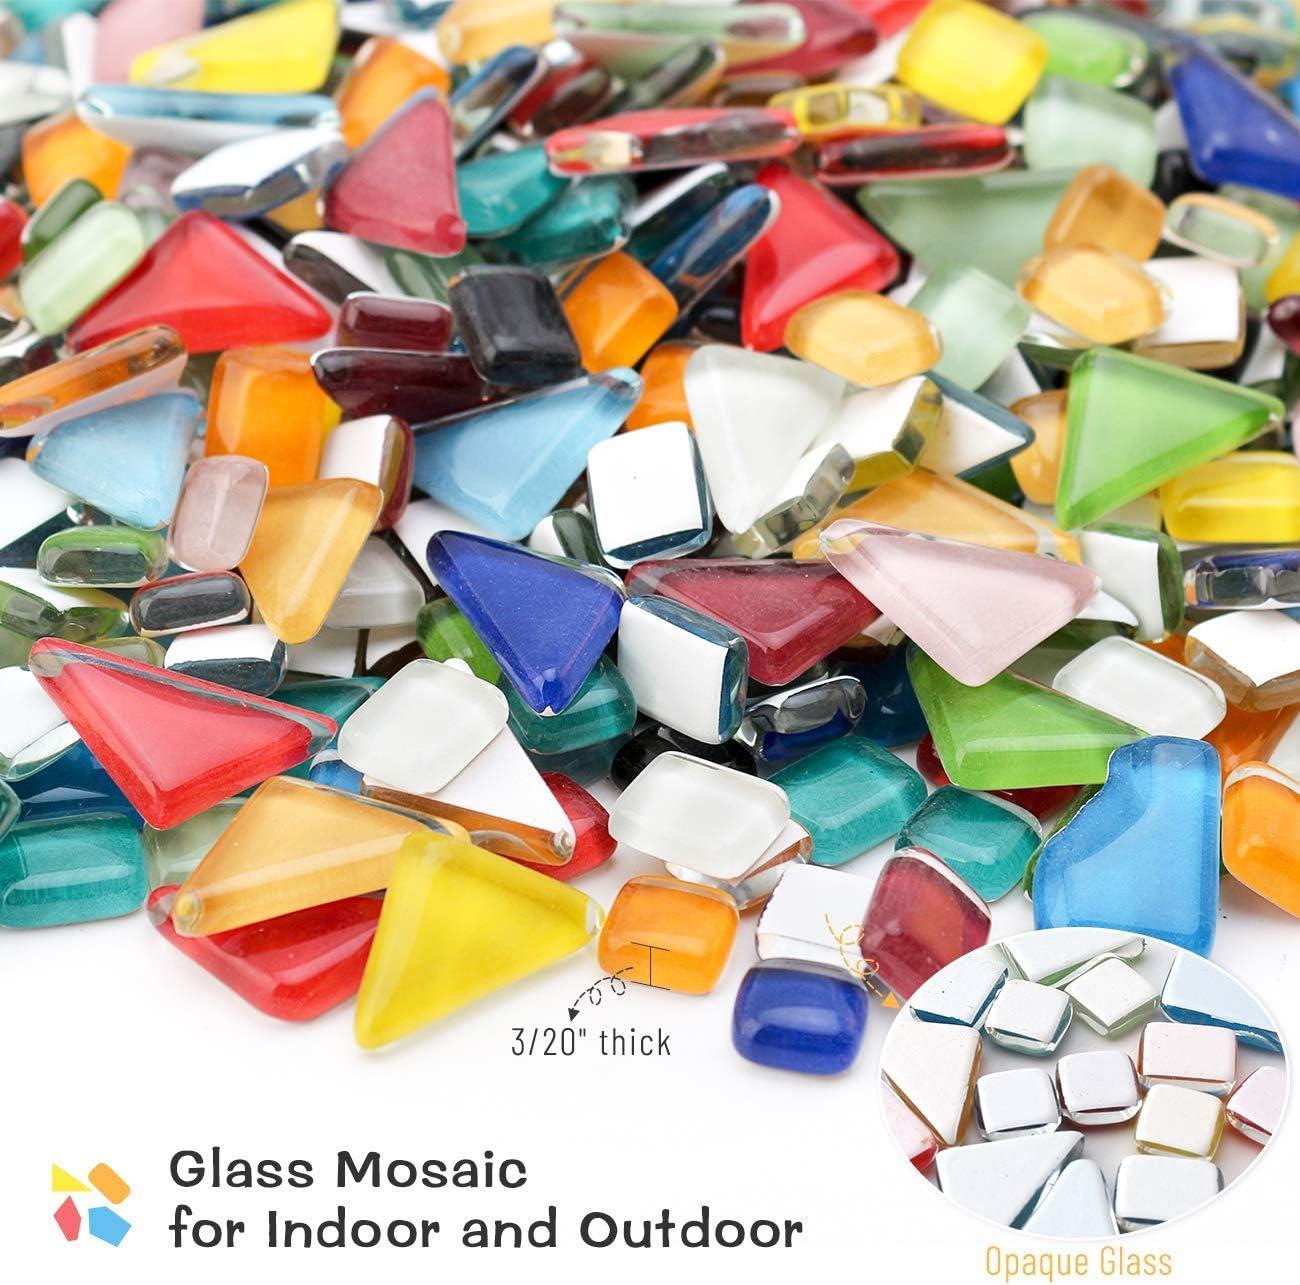 Mirror Mosaic Tiles - Small - 1kg Pack, Mosaics